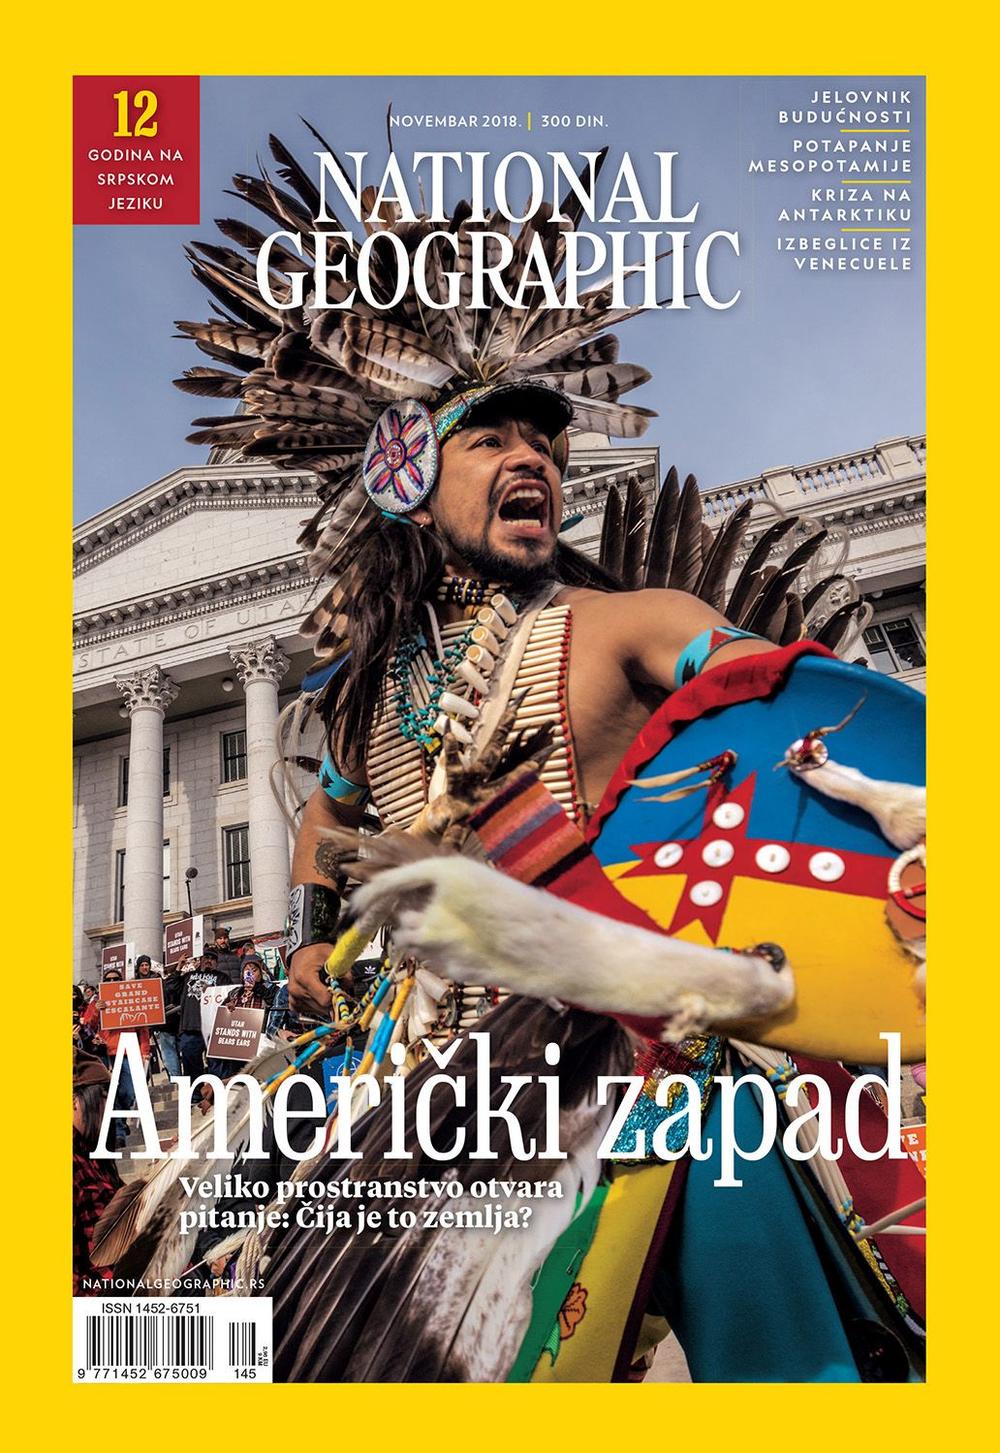 Slavljeničko izdanje časopisa Nathional Geographic  